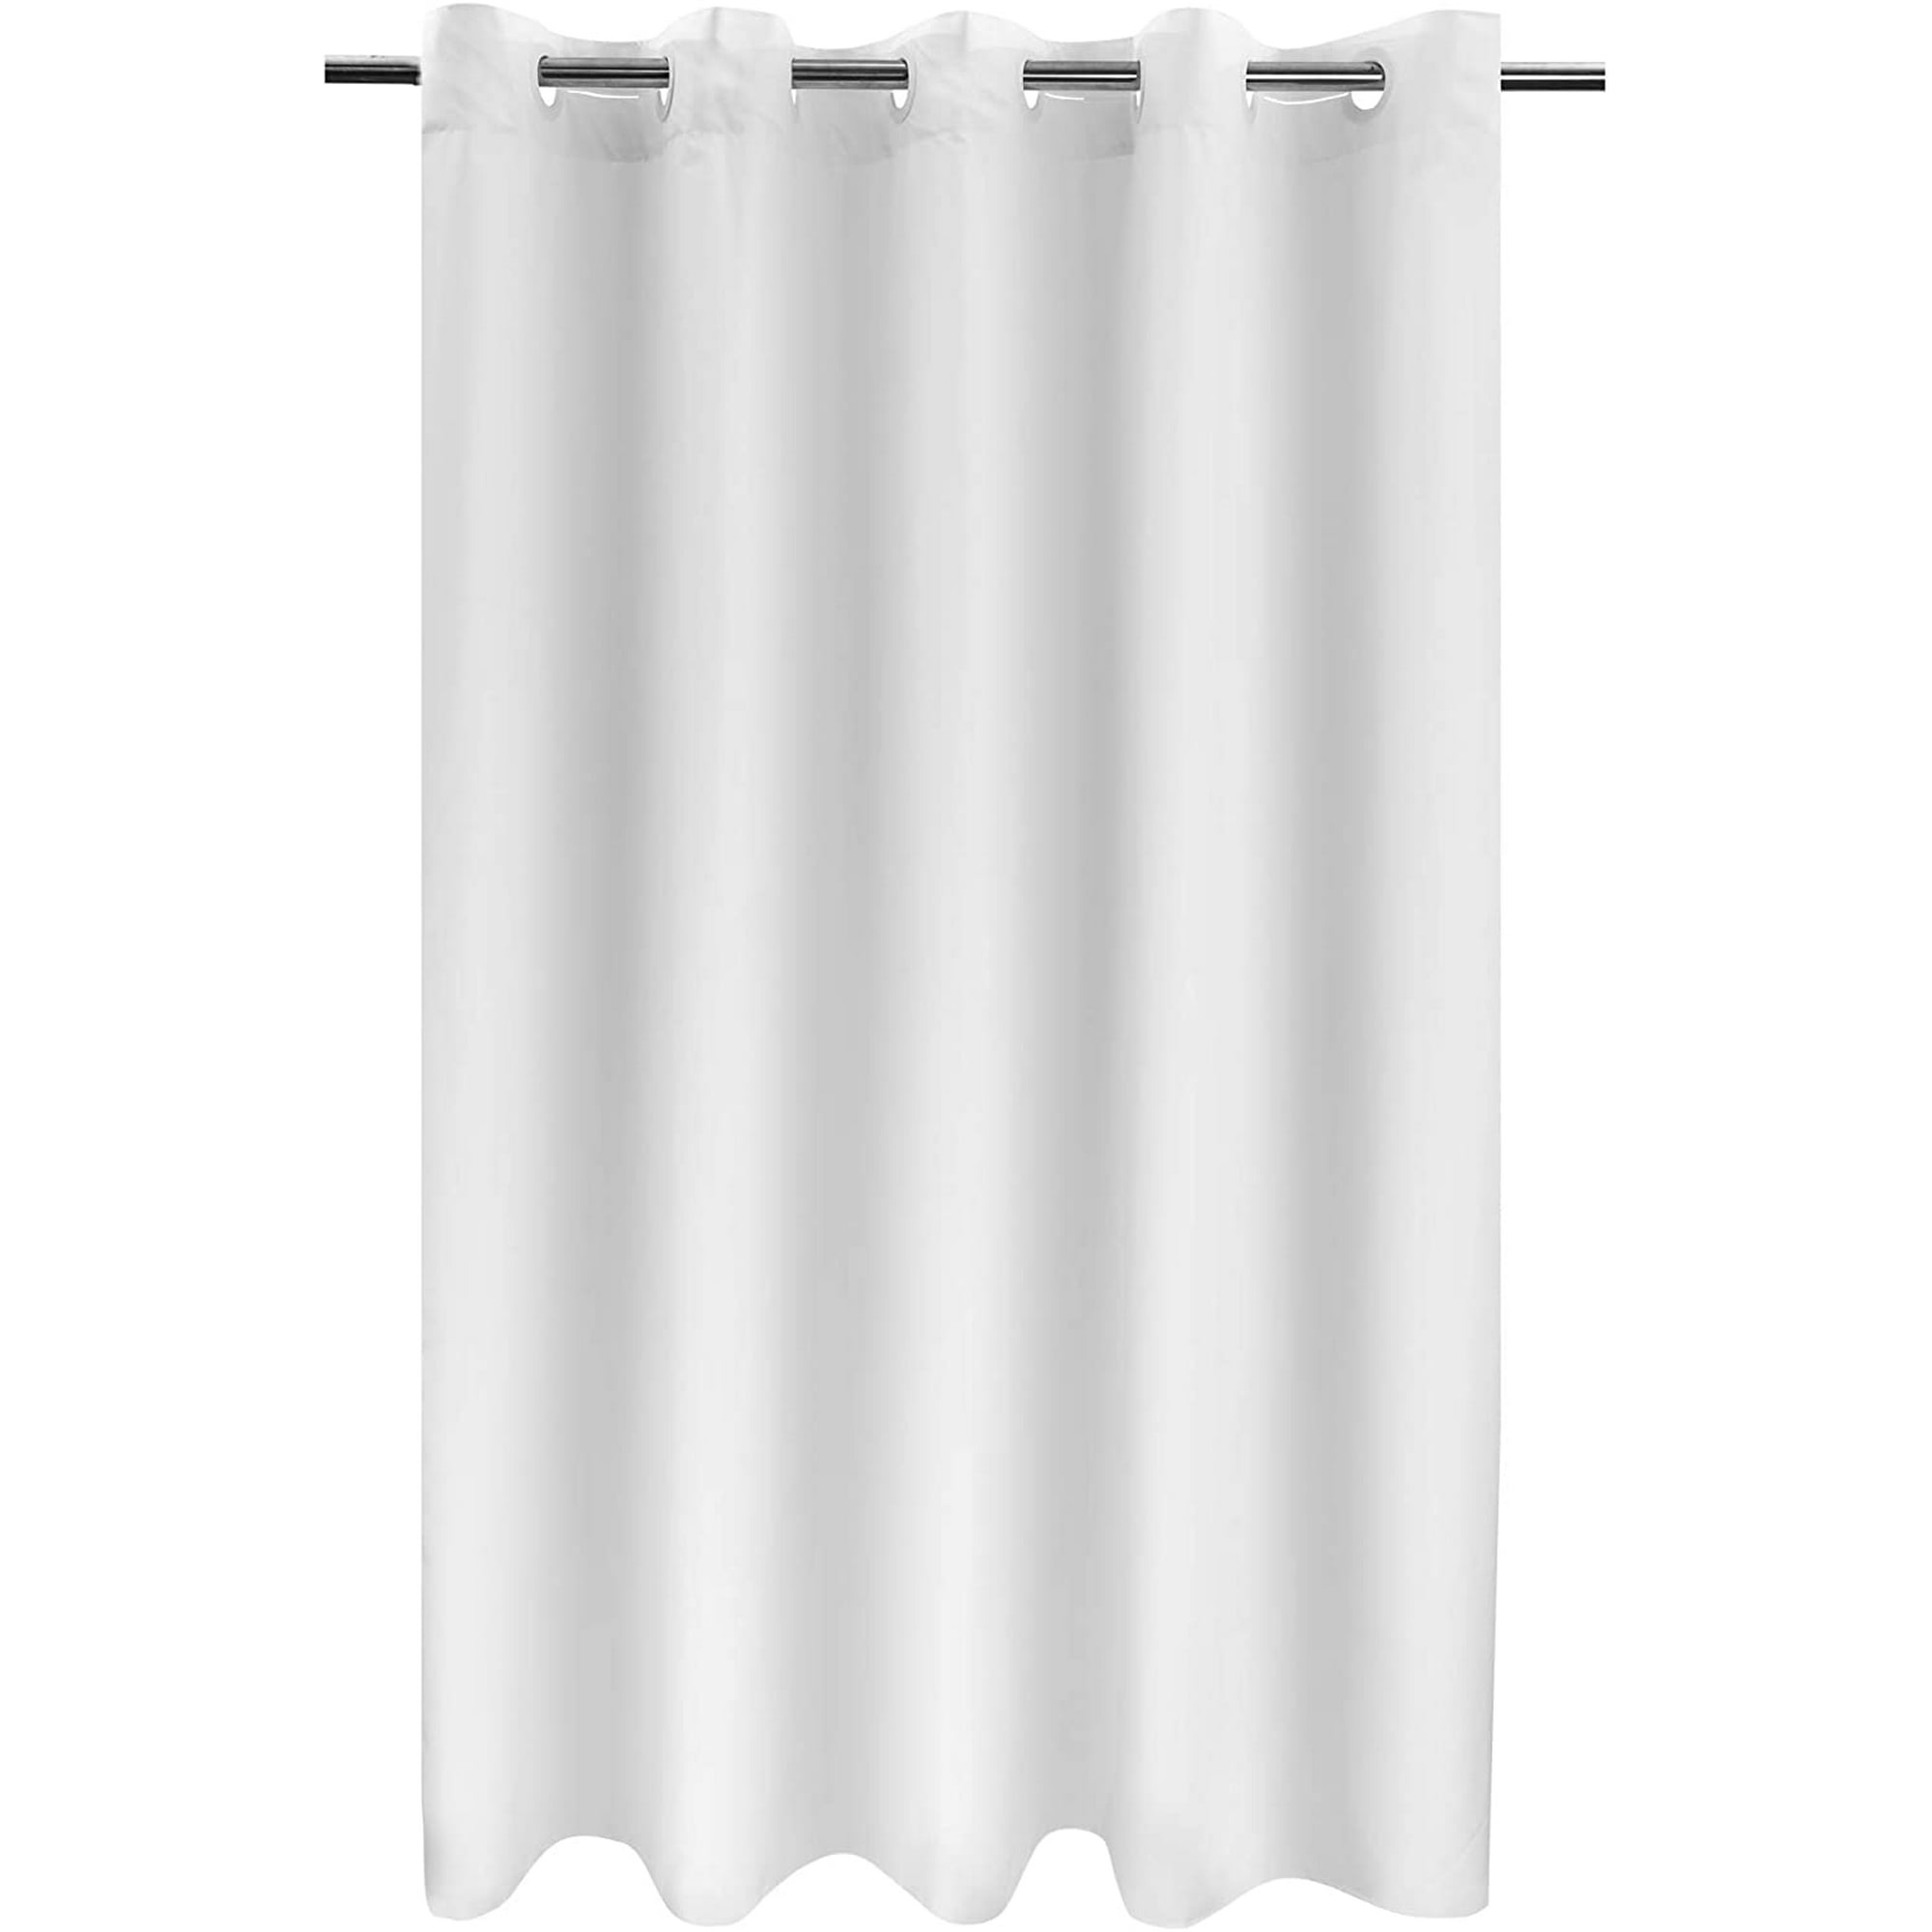 Fabric Shower Curtain No Hooks Needed, Waterproof Fabric Shower Curtain No Liner Needed